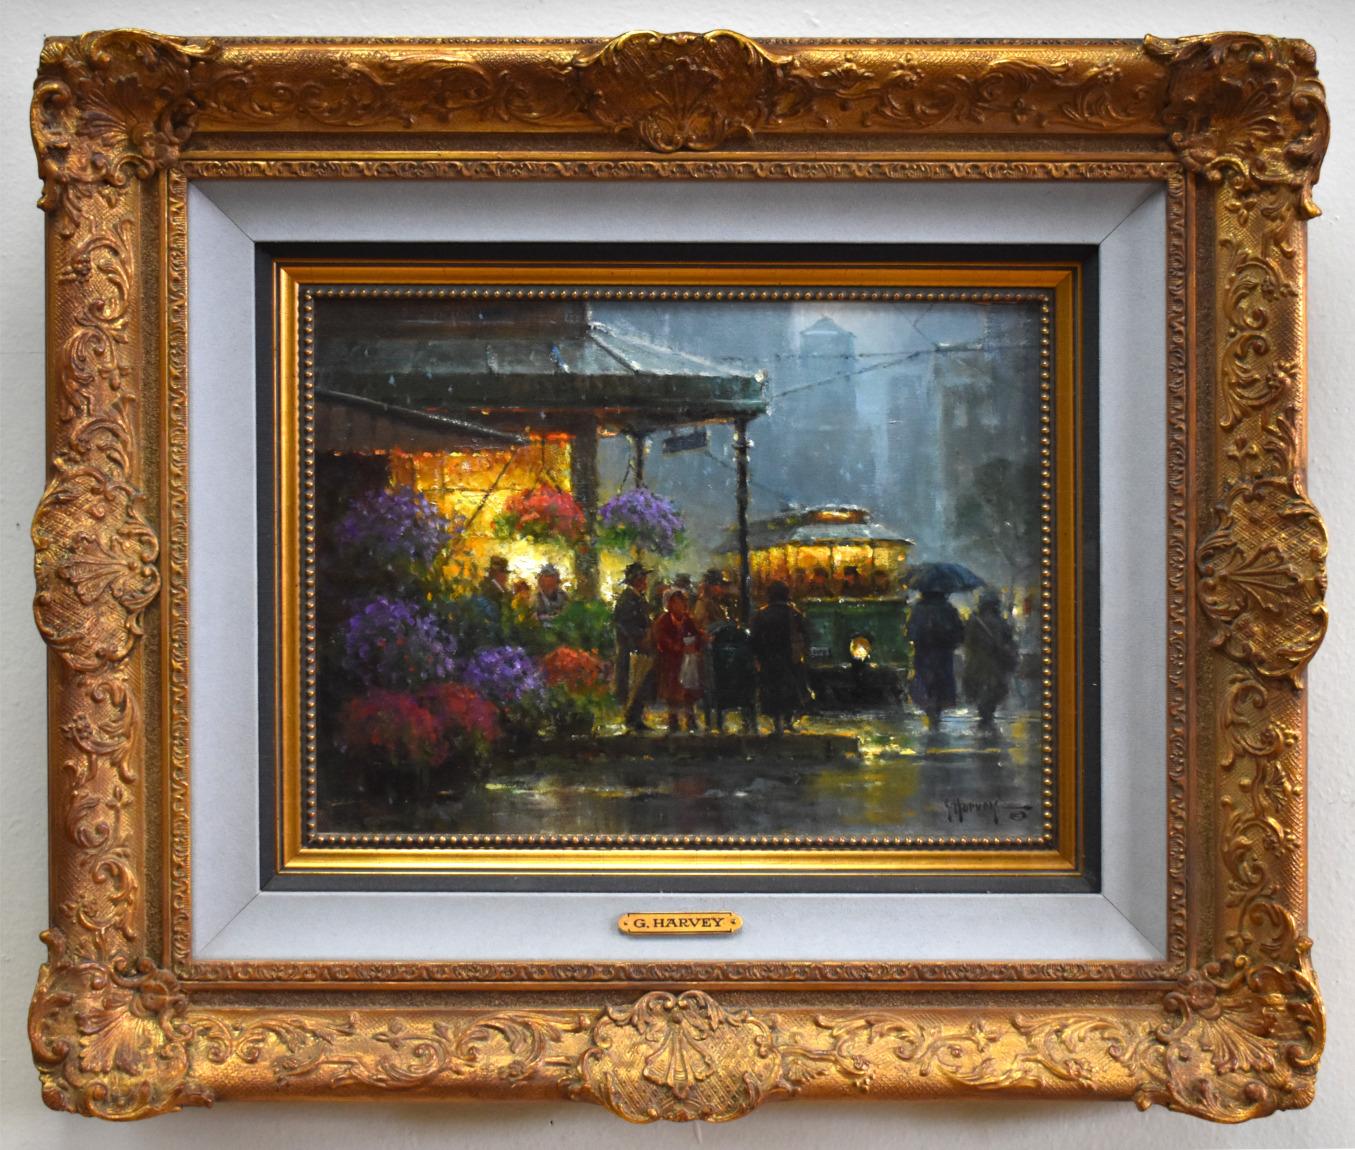 G. Harvey Landscape Painting - "Showers At The Market" Cityscape Flower Seller